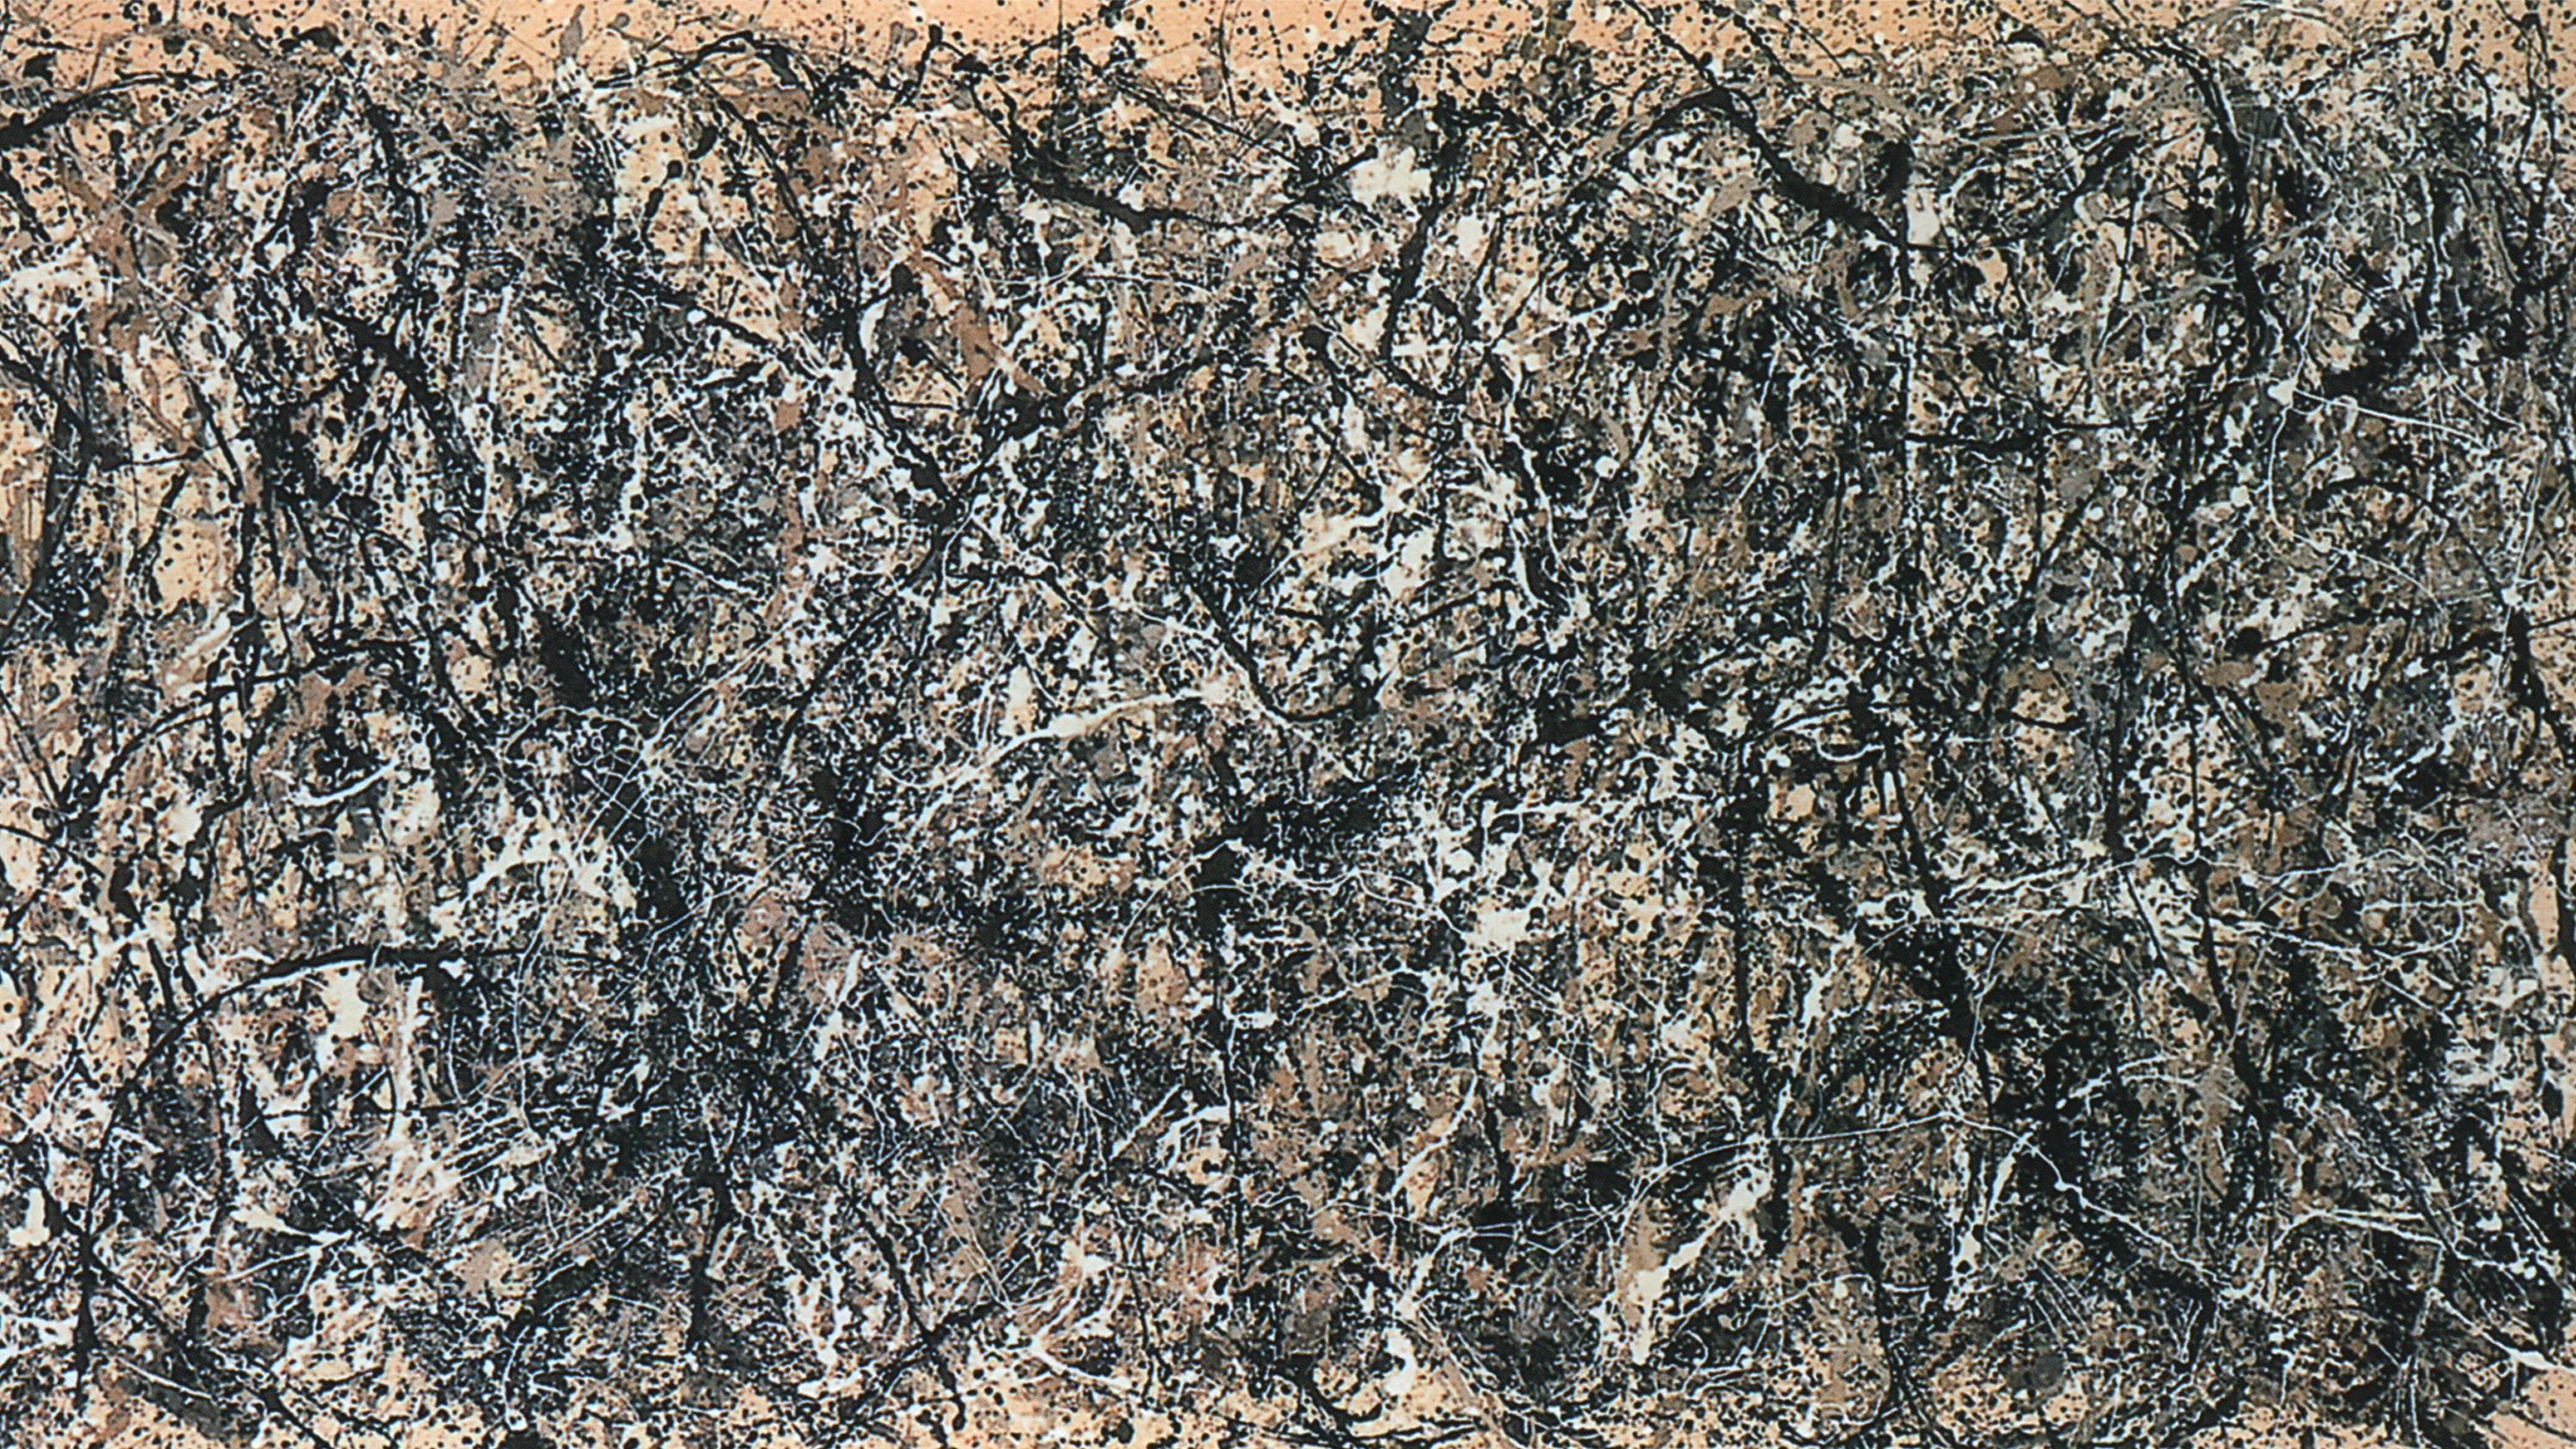 Jackson Pollock, retrospectiva y balance